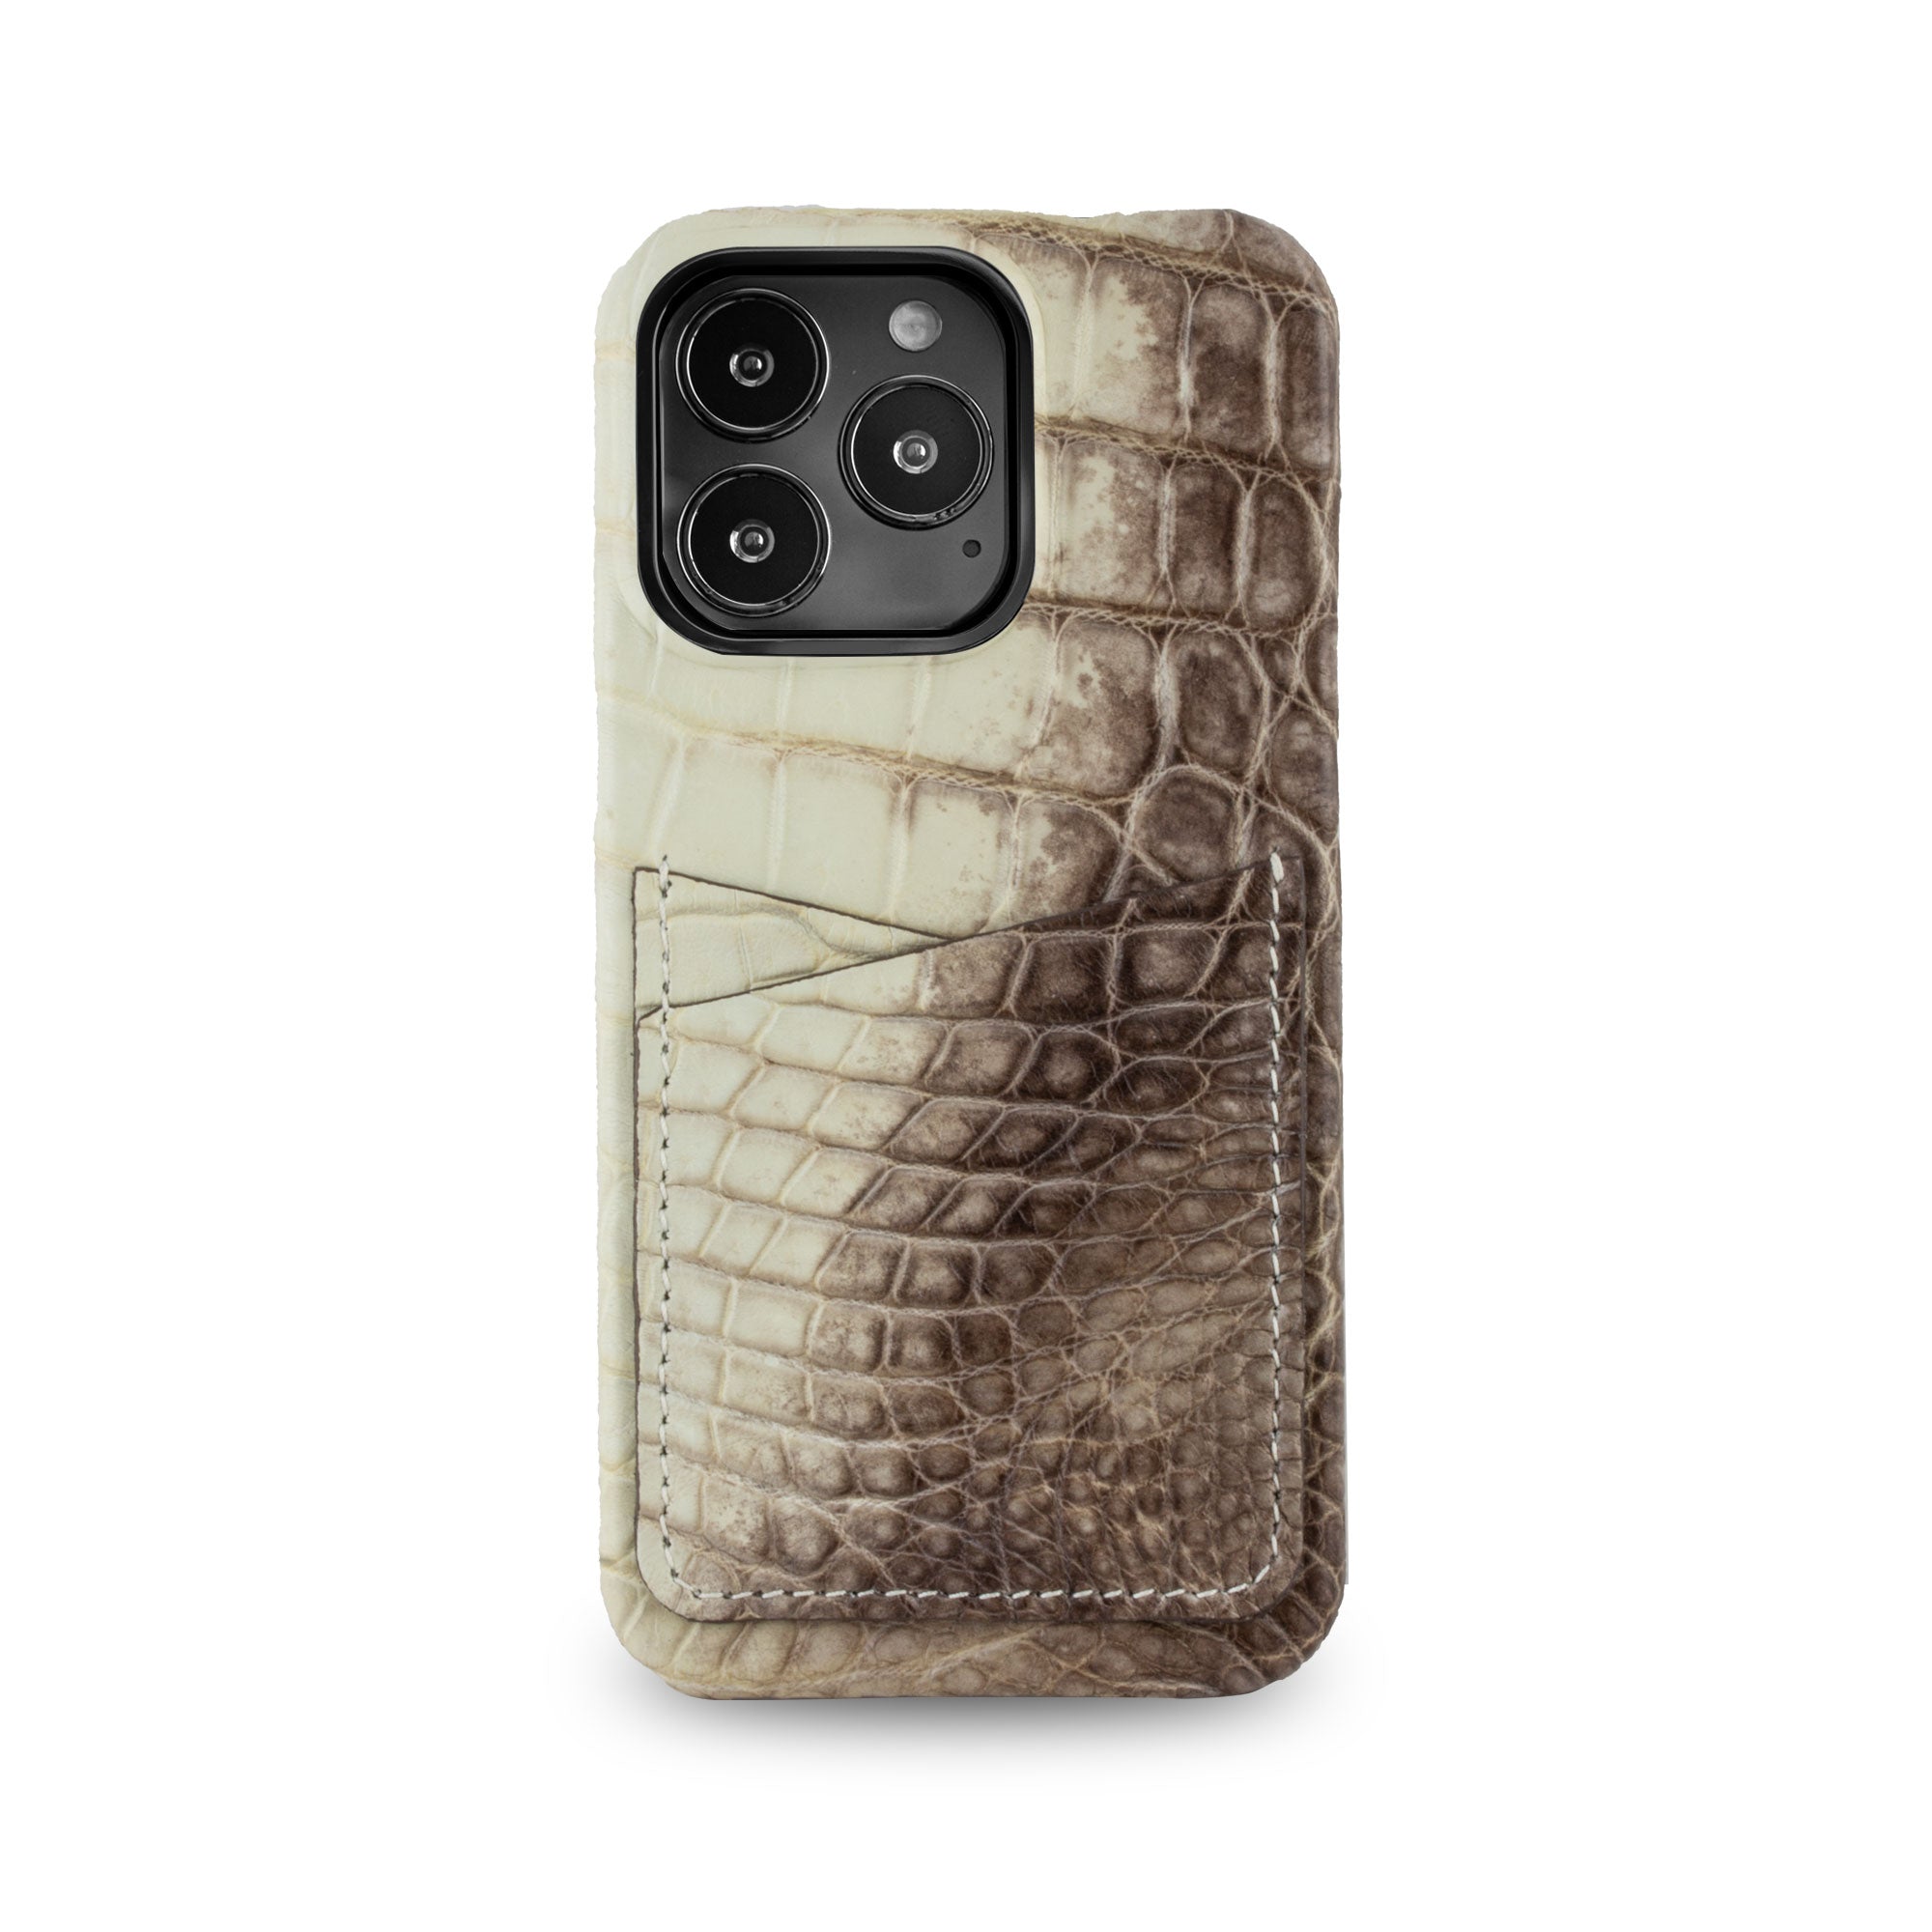 Leather iPhone HIMALAYA "Card case" / cover - iPhone 15, 14 & 13  Pro / Pro Max ) - Genuine crocodile